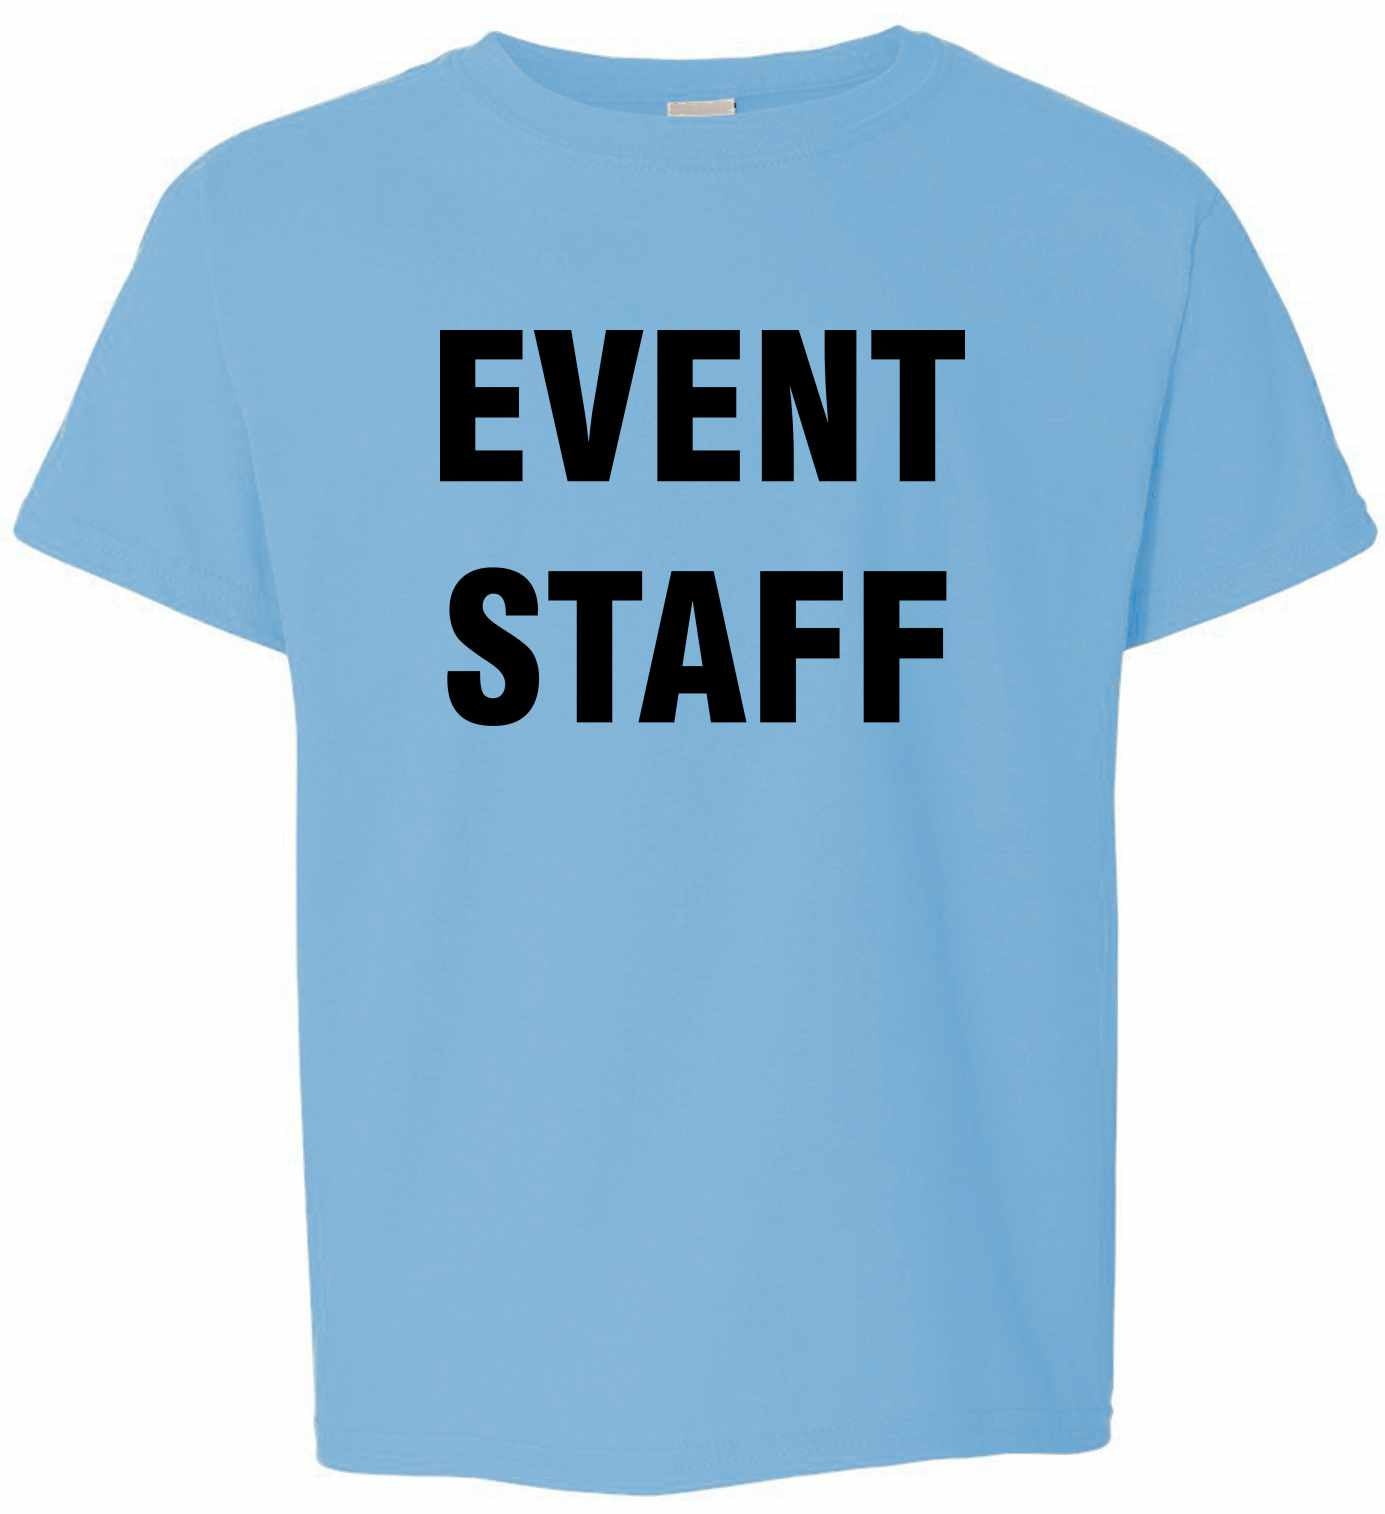 EVENT STAFF on Kids T-Shirt (#399-201)